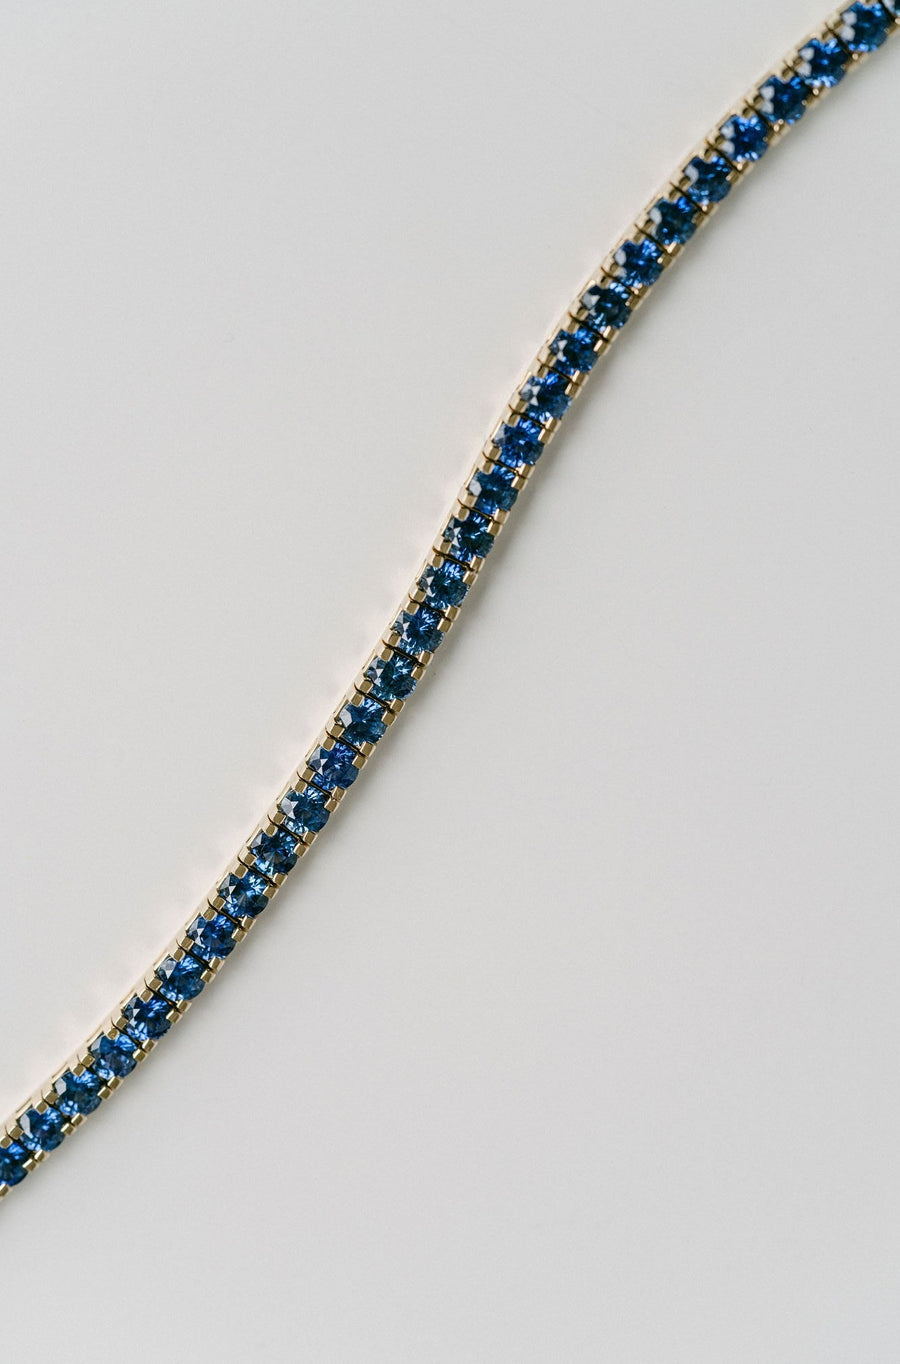 Round Blue Sri Lankan Sapphire Tennis Bracelet With Flat Prongs, 14k Yellow Gold